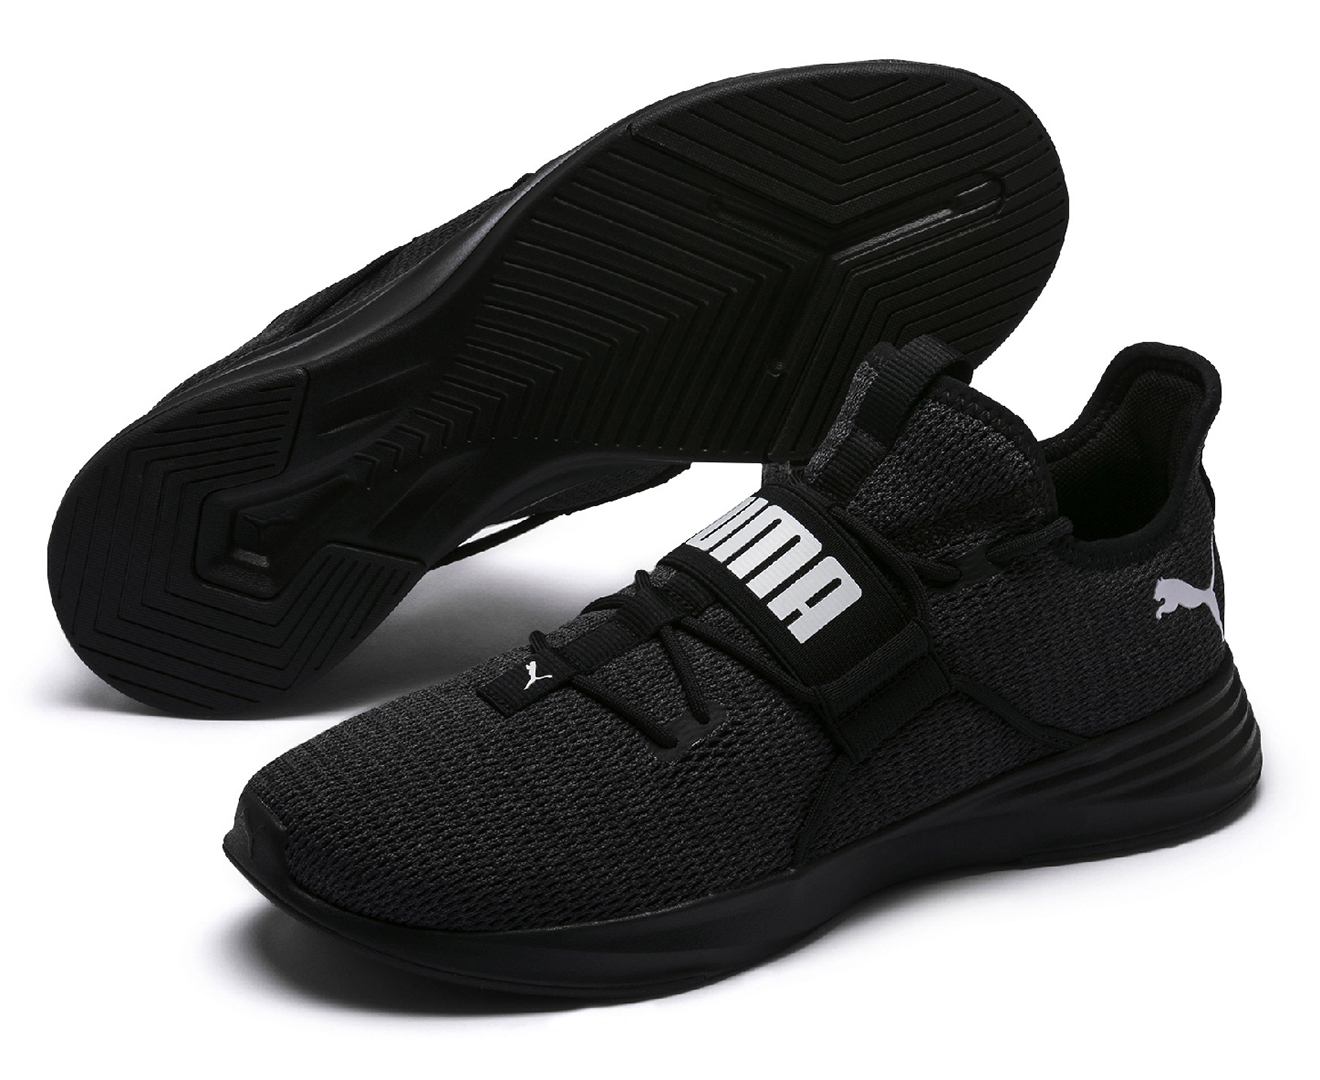 Puma Men's Persist XT Shoes - Puma Black/Asphalt | Catch.com.au